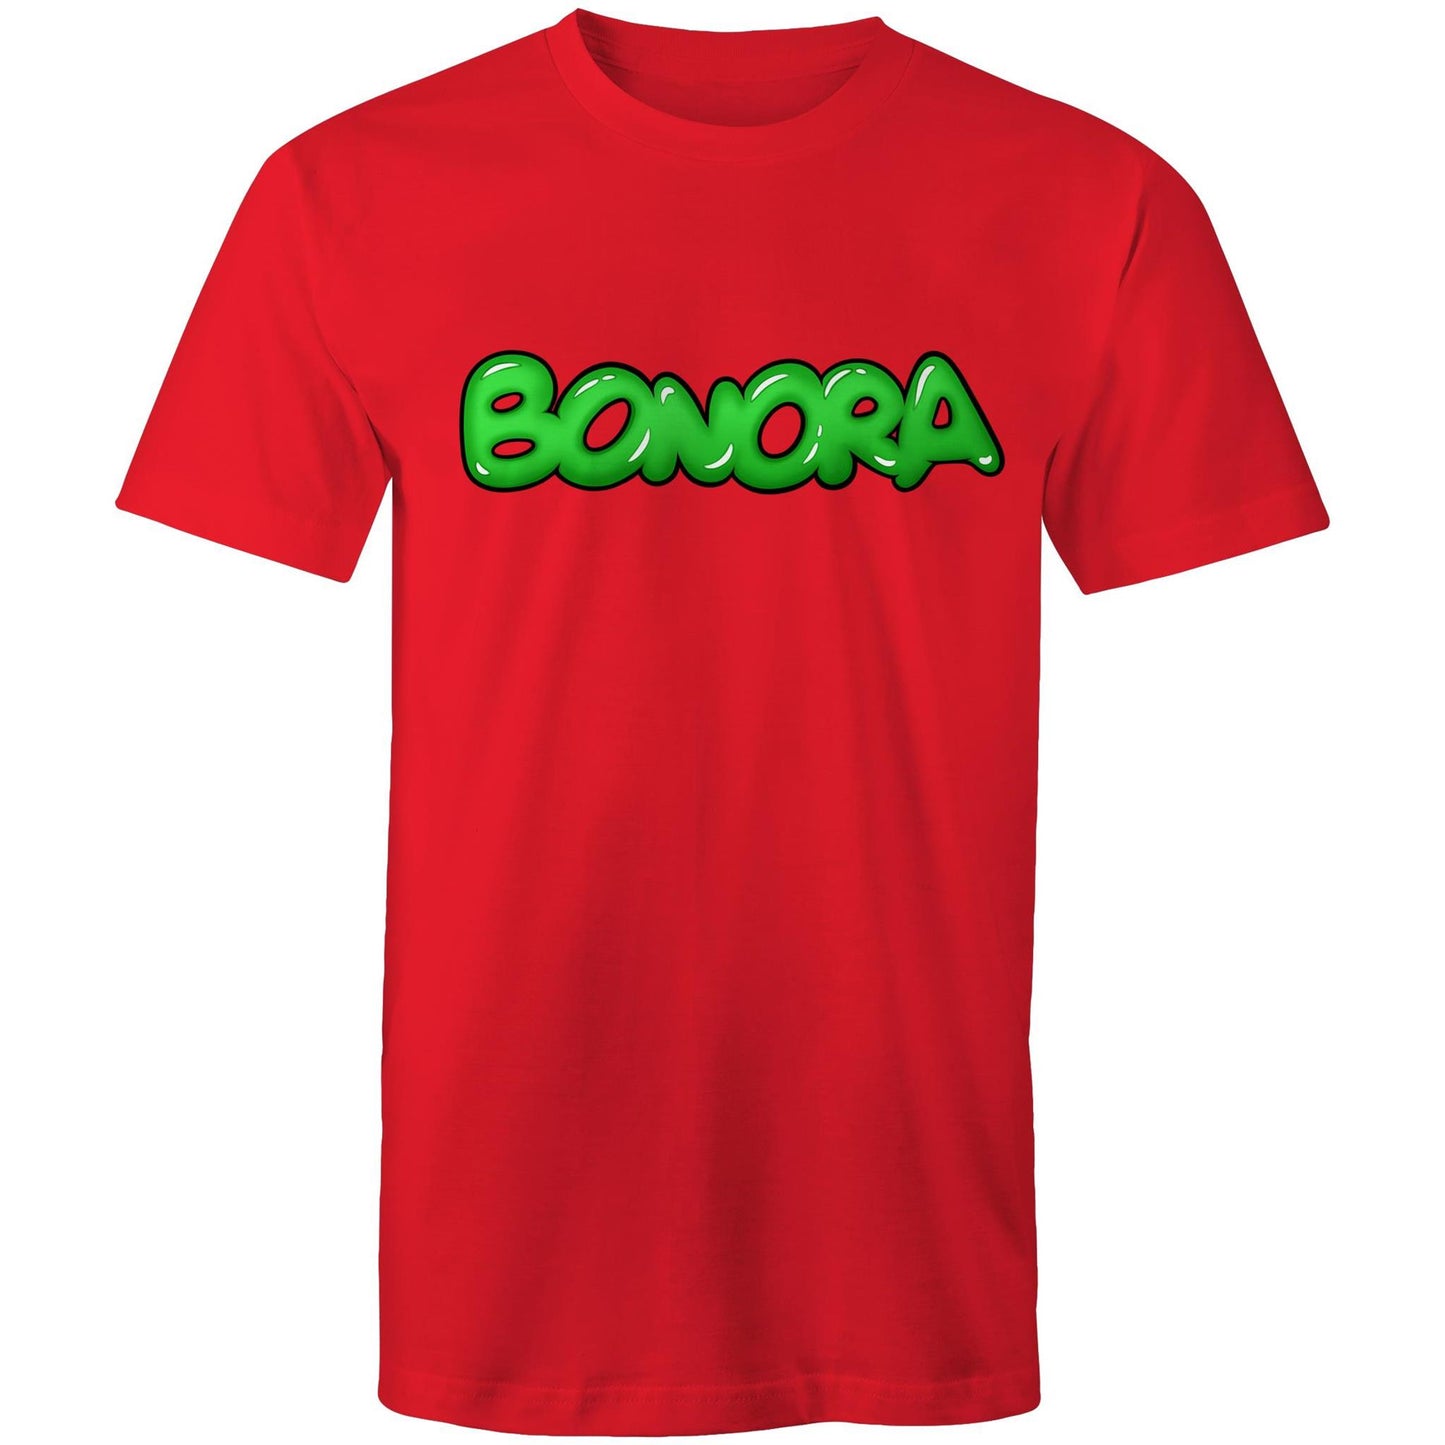 Bubble Bonora Comfy Tee